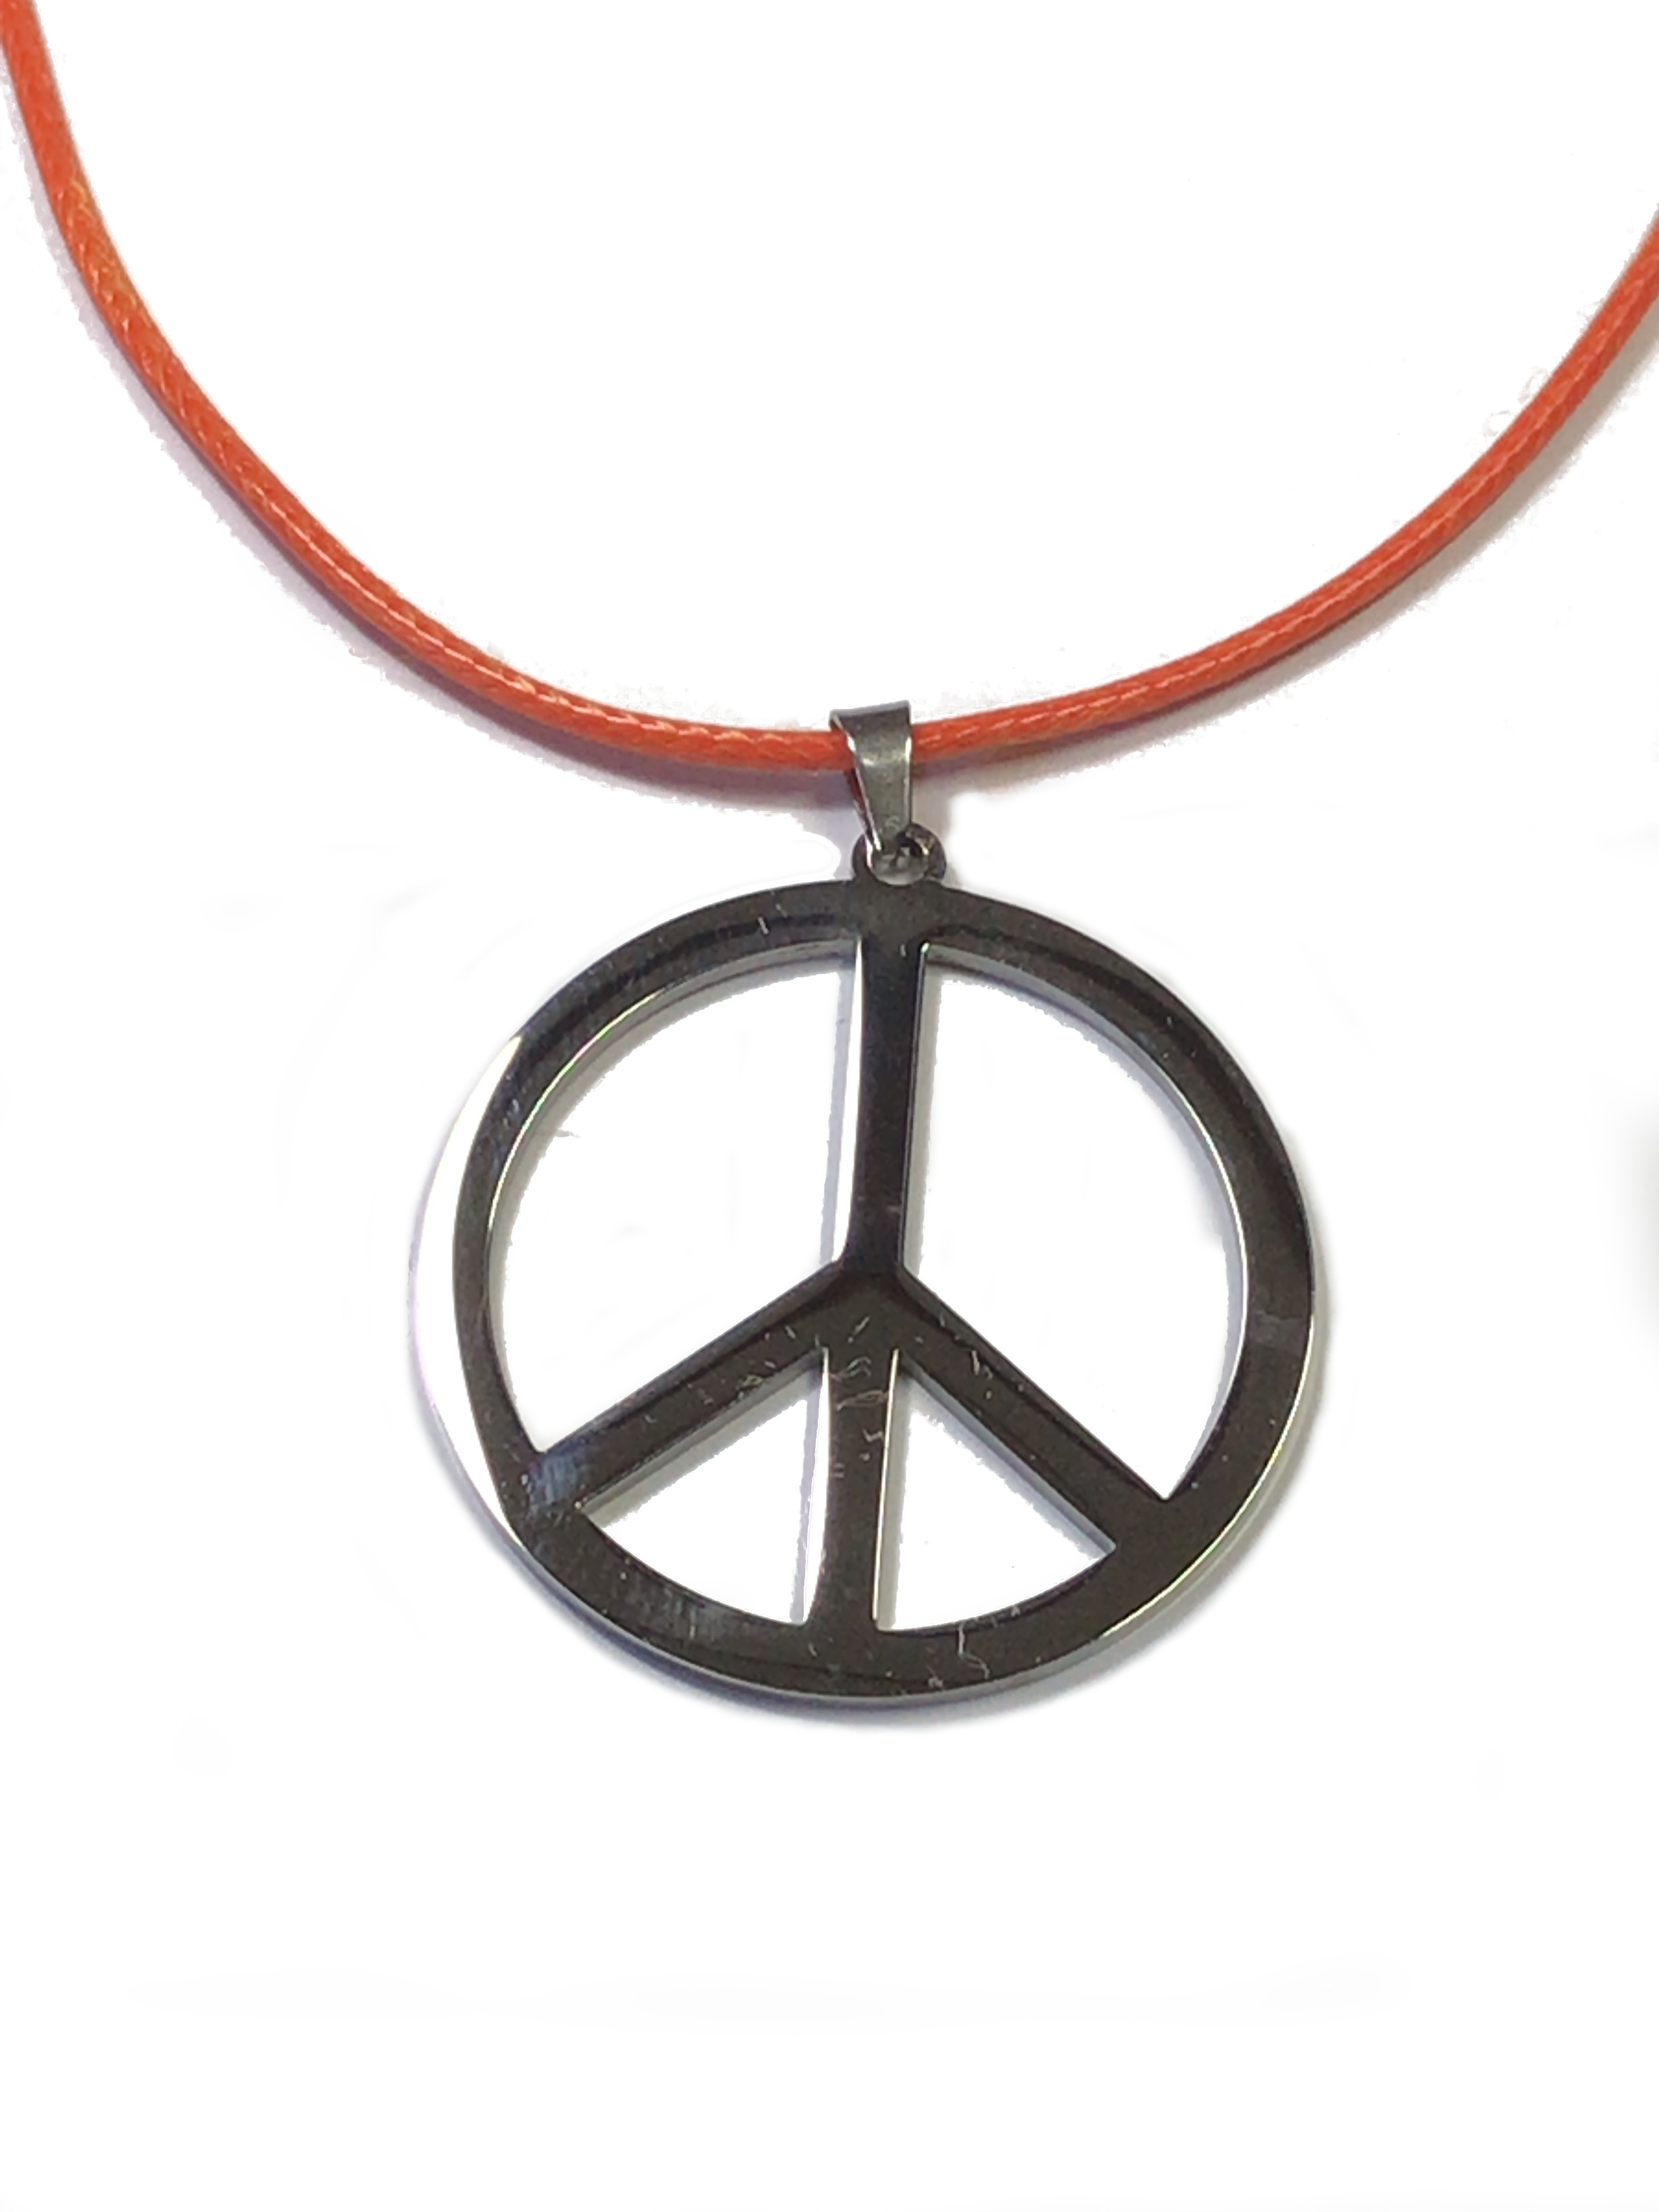 Peace Mark Necklace Chain Orange Top Silver Stainless Men's Women's Pendant Accessory